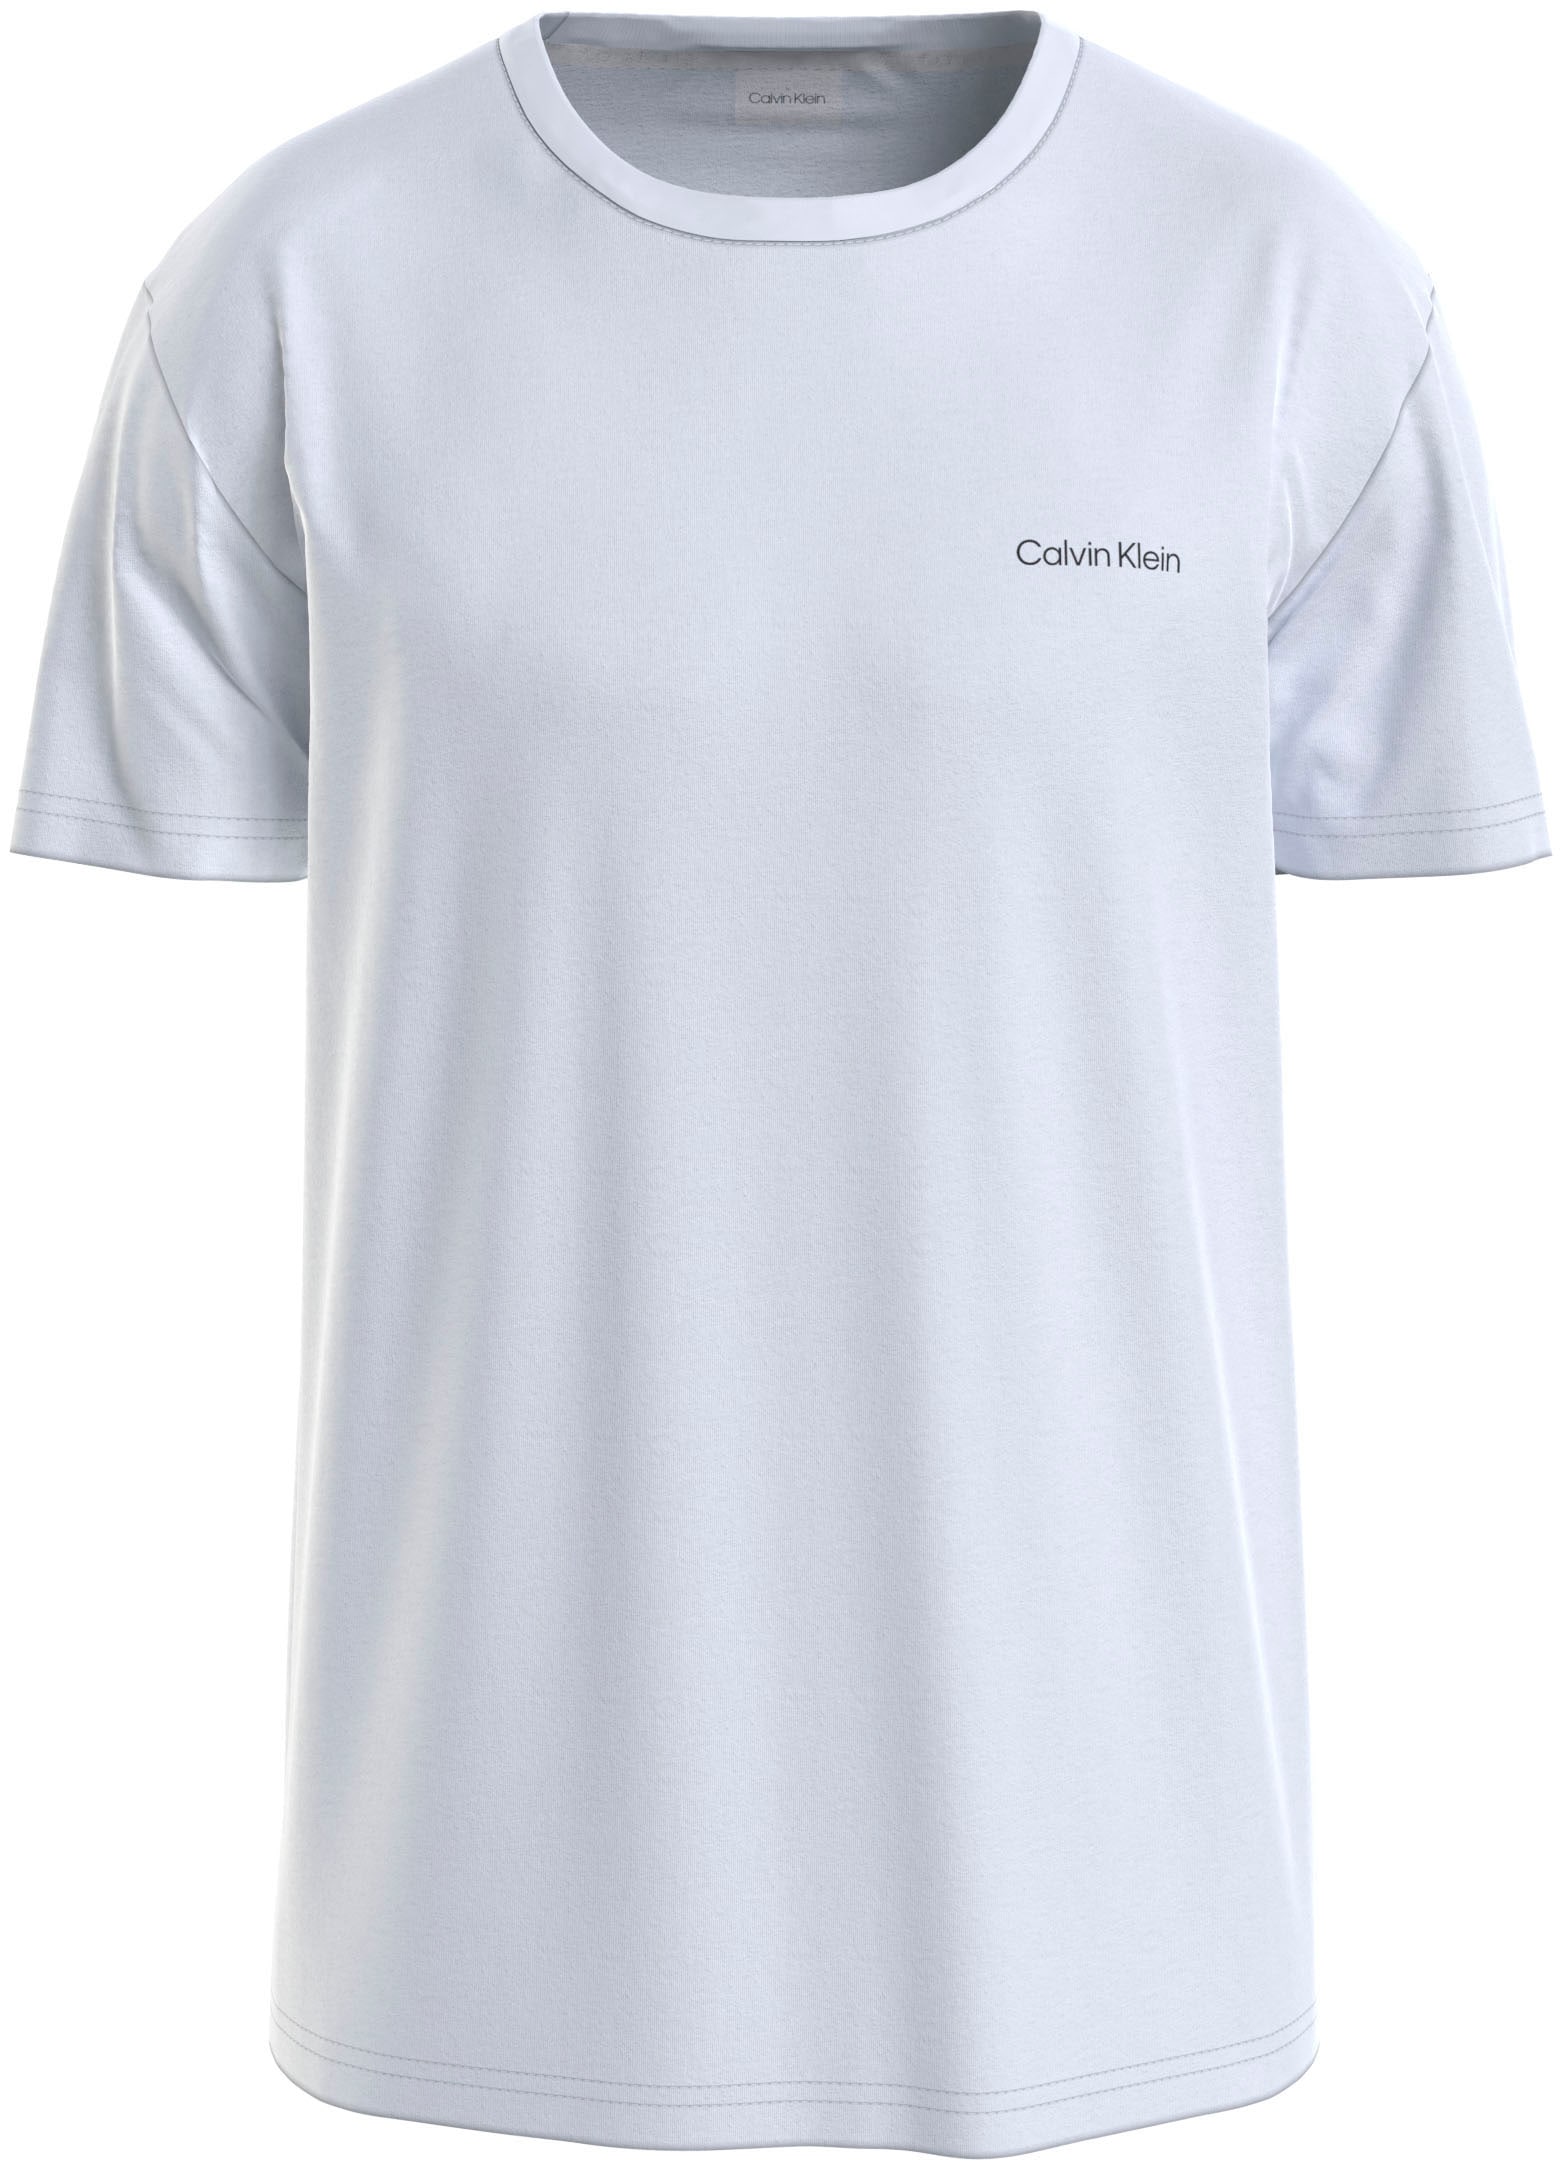 OTTO T-Shirt Logo«, Winterjersey »Micro dickem aus Klein bei Calvin shoppen online